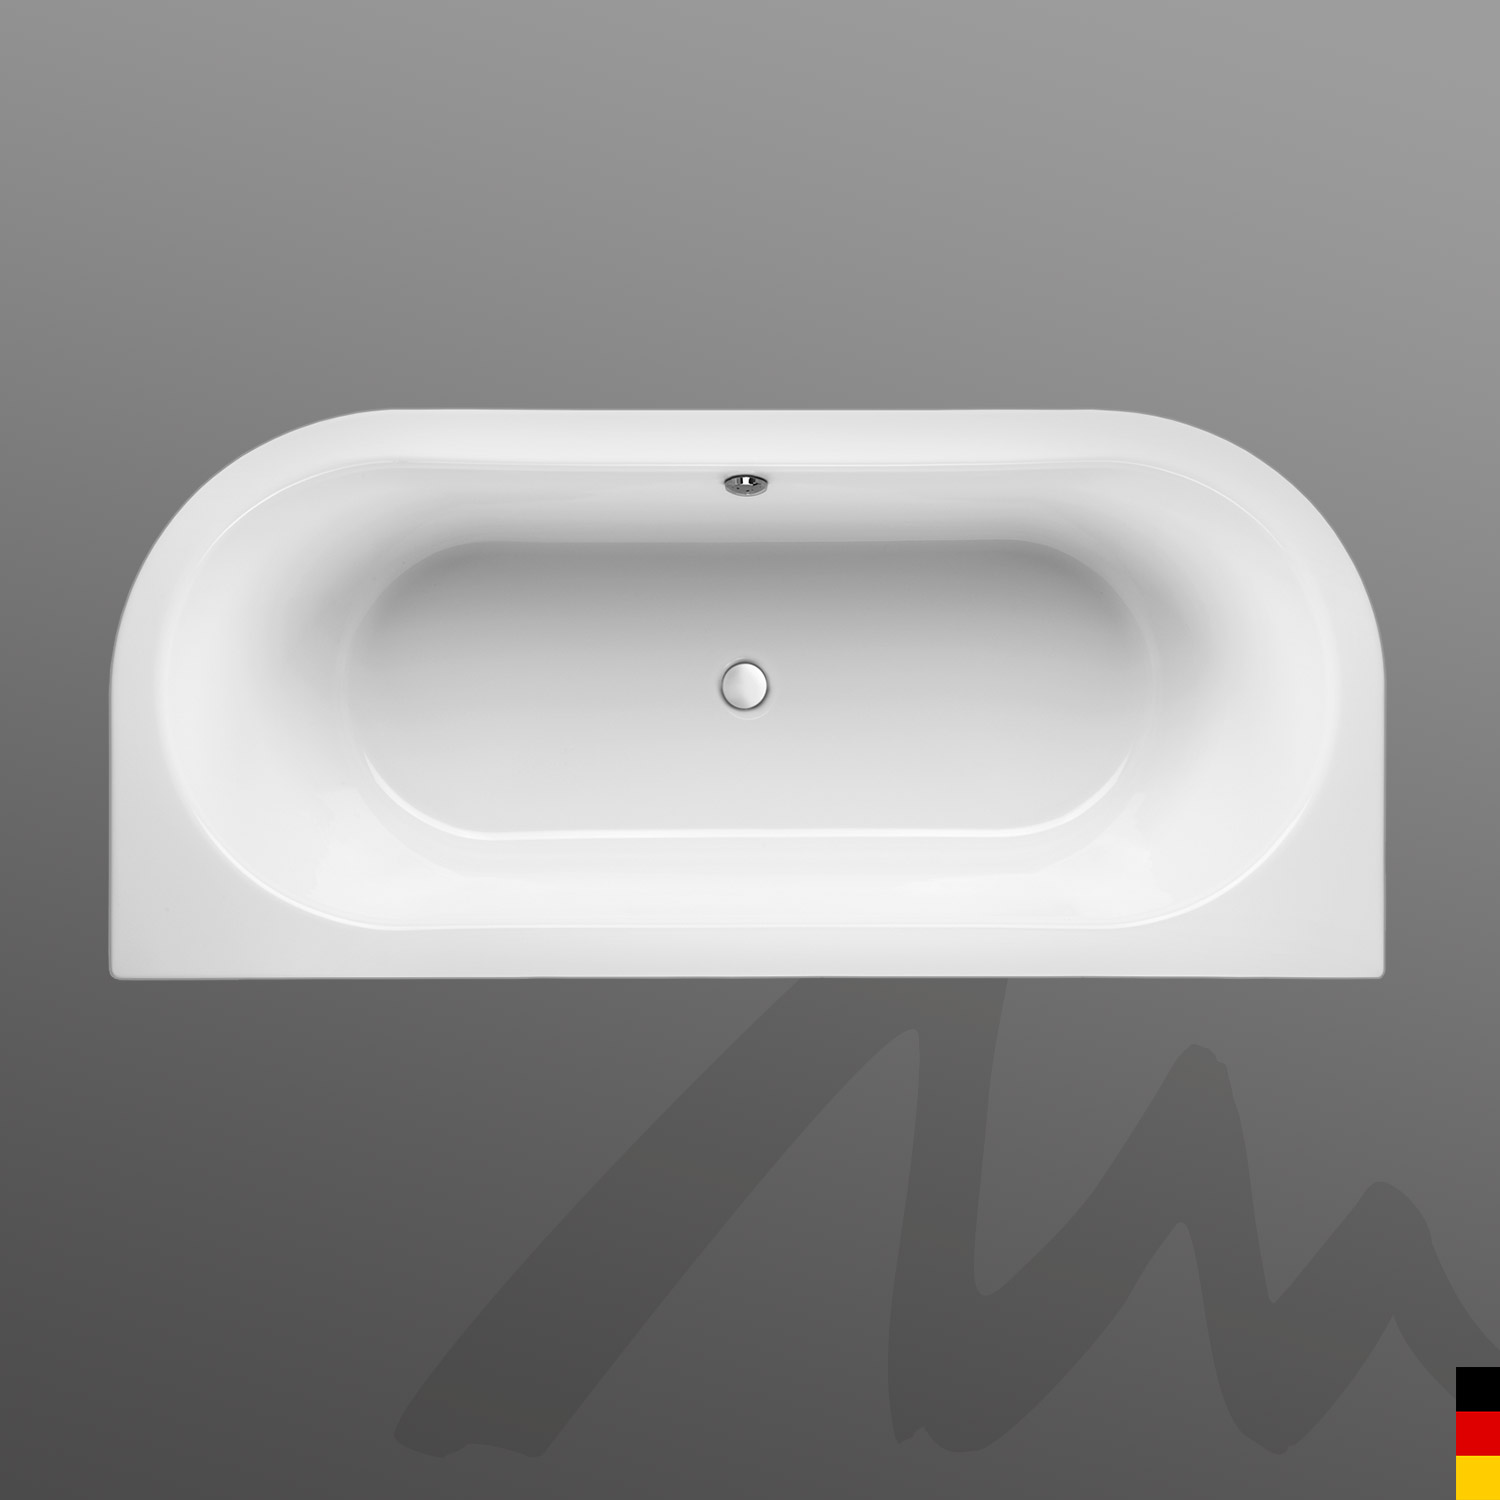 Mauersberger Badewanne Oval Primo 2 - 170/75 duo  170x75x44  Farbe:rein-weiß